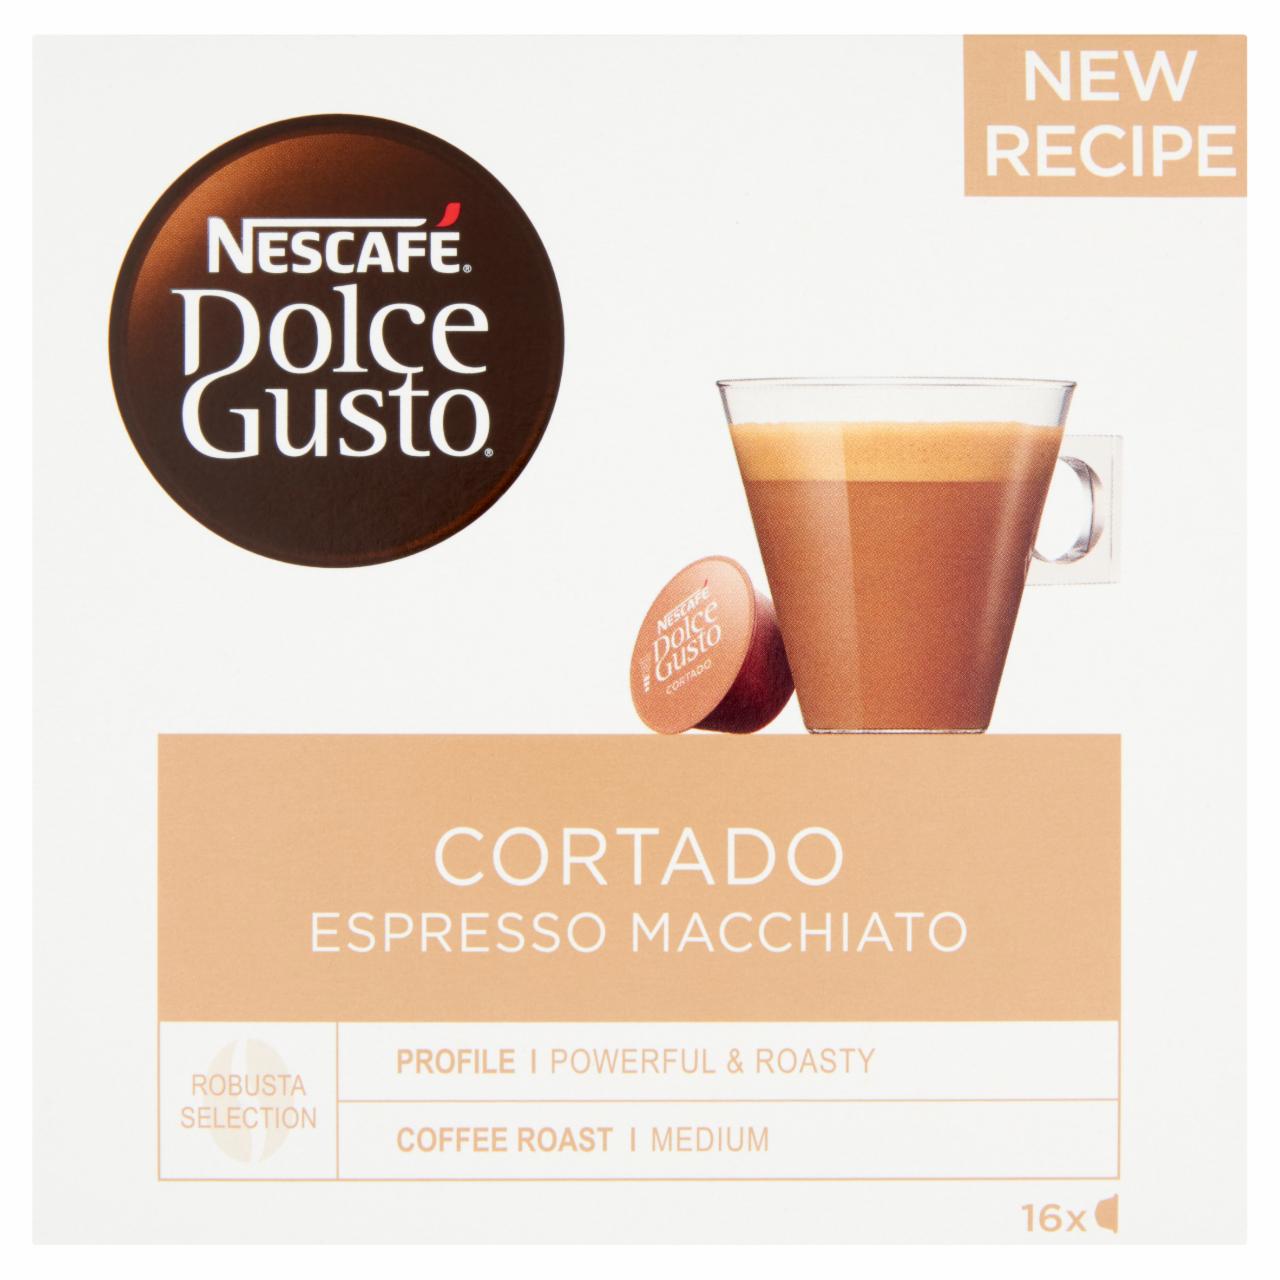 Képek - NESCAFÉ Dolce Gusto Cortado Espresso Macchiato tejes kávékapszula 16 db 100,8 g